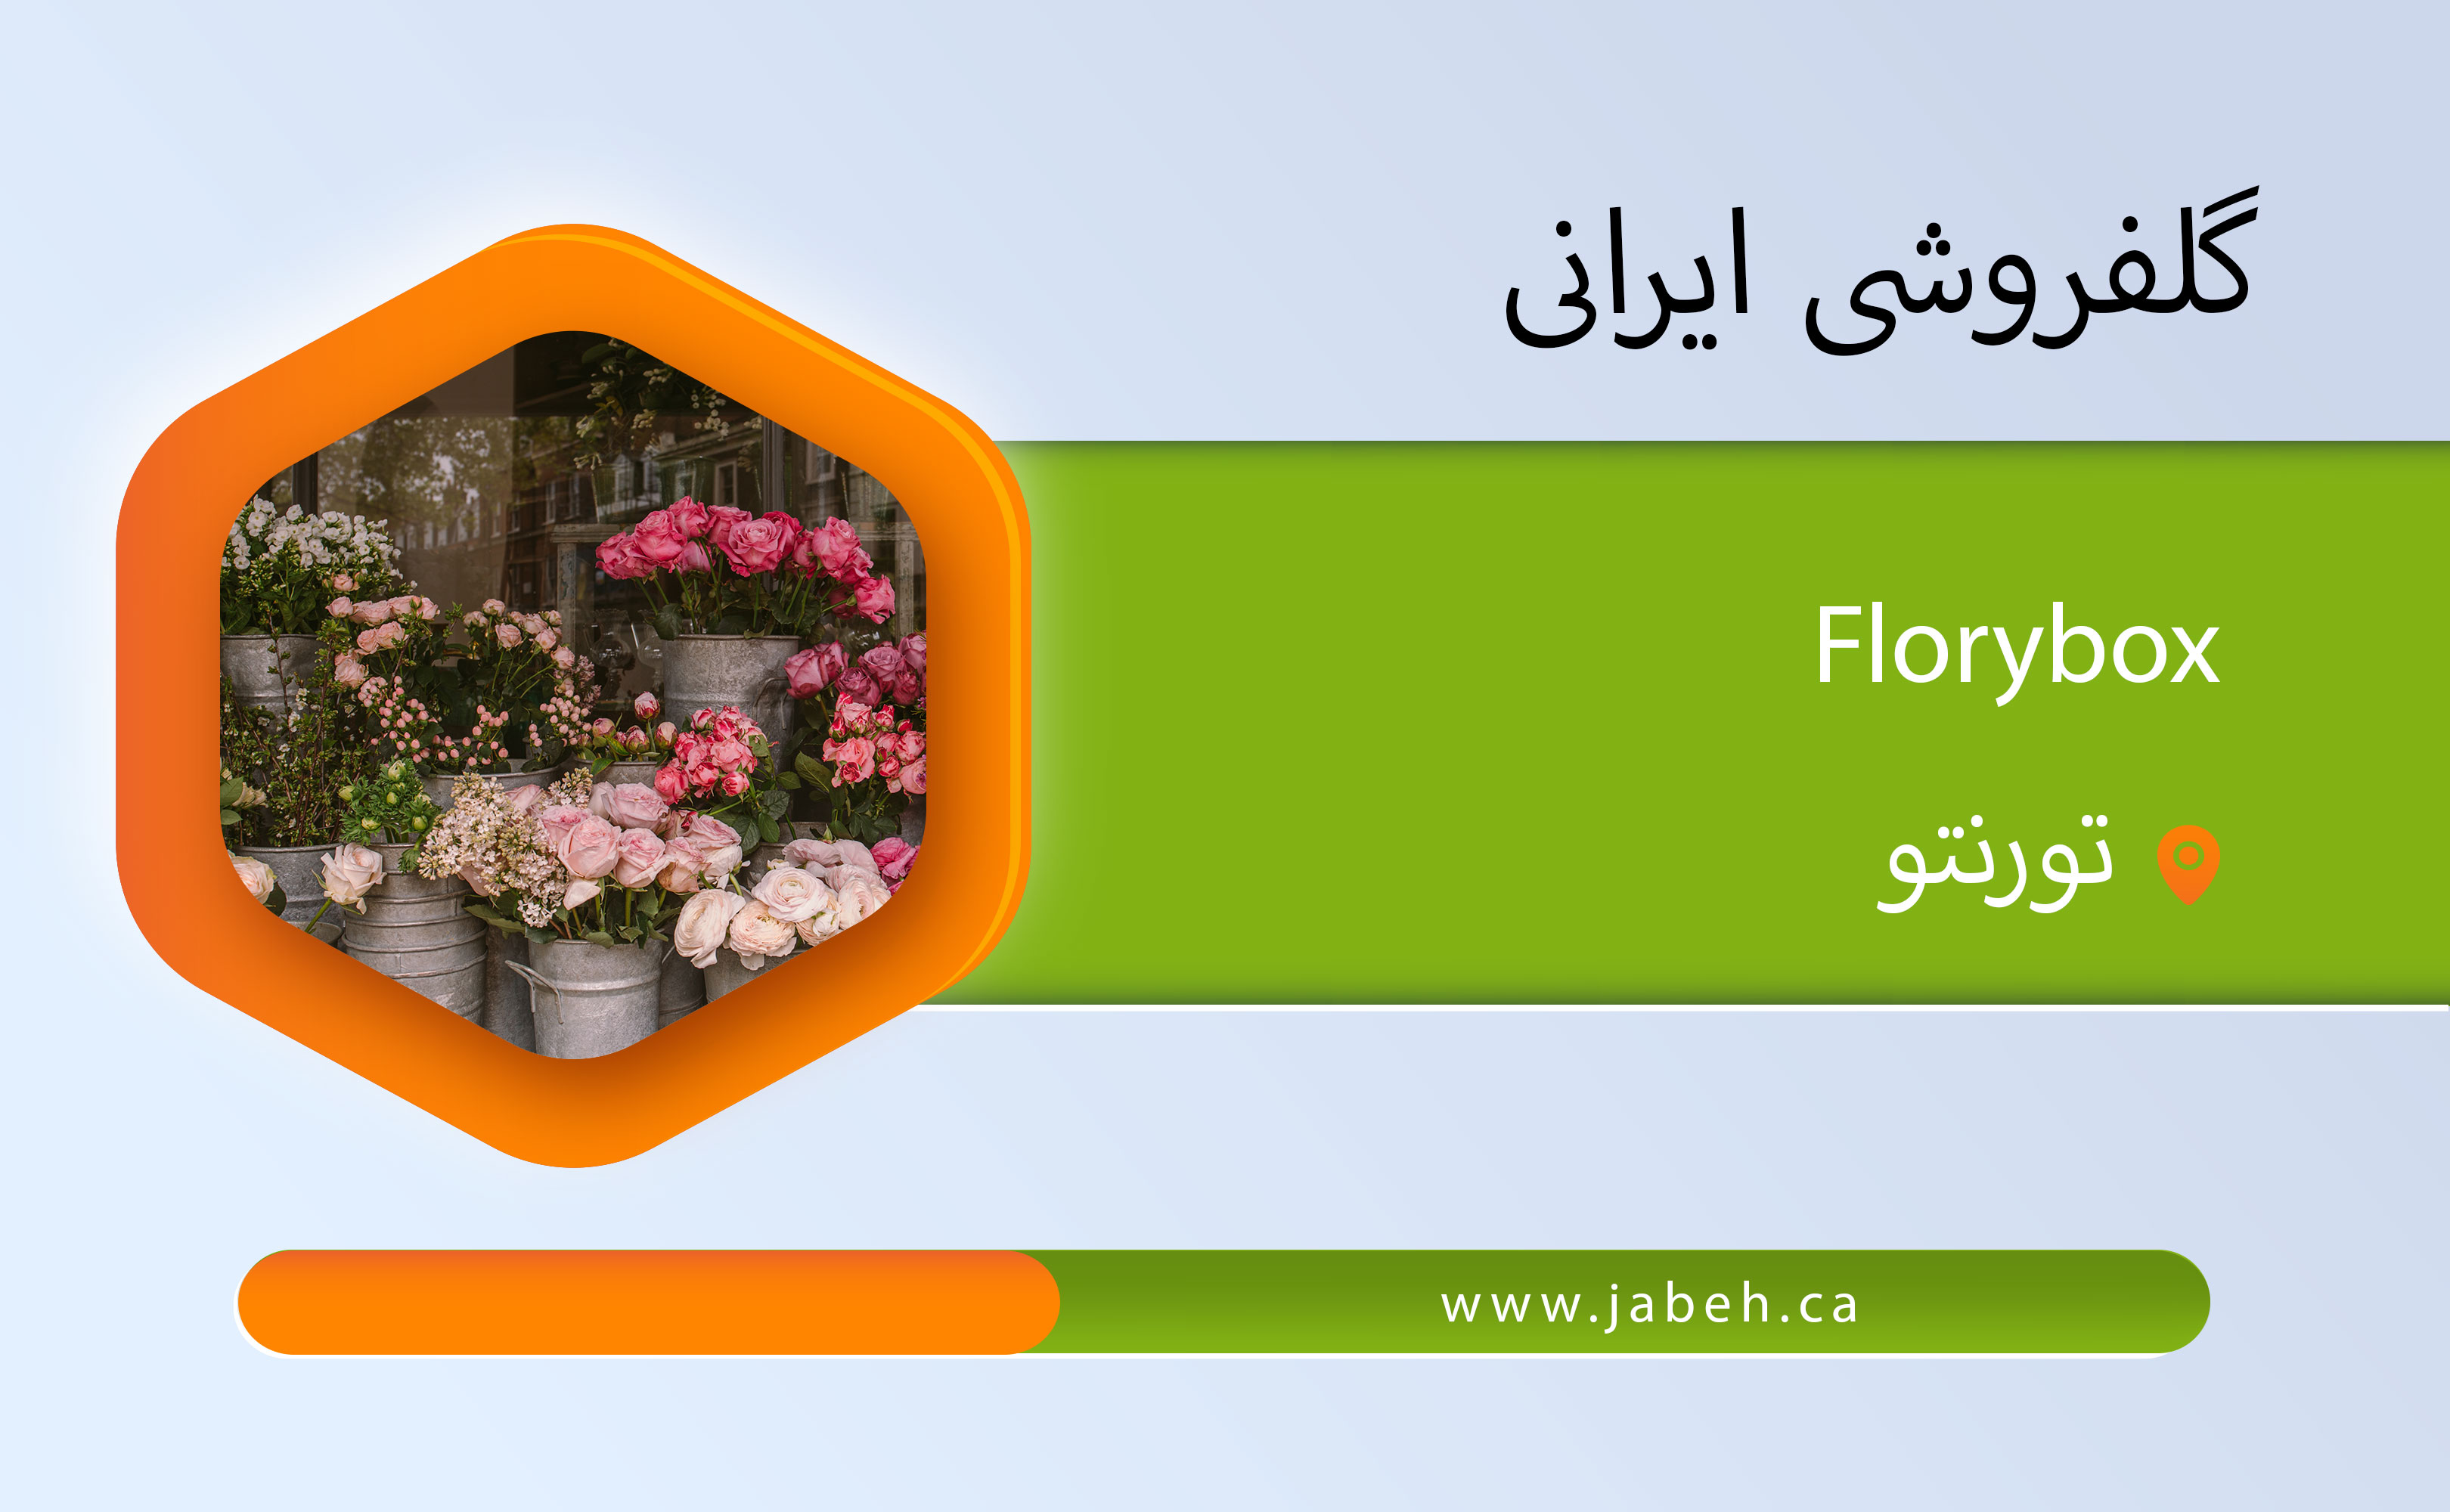 Iranian flower shop in Toronto Florybox